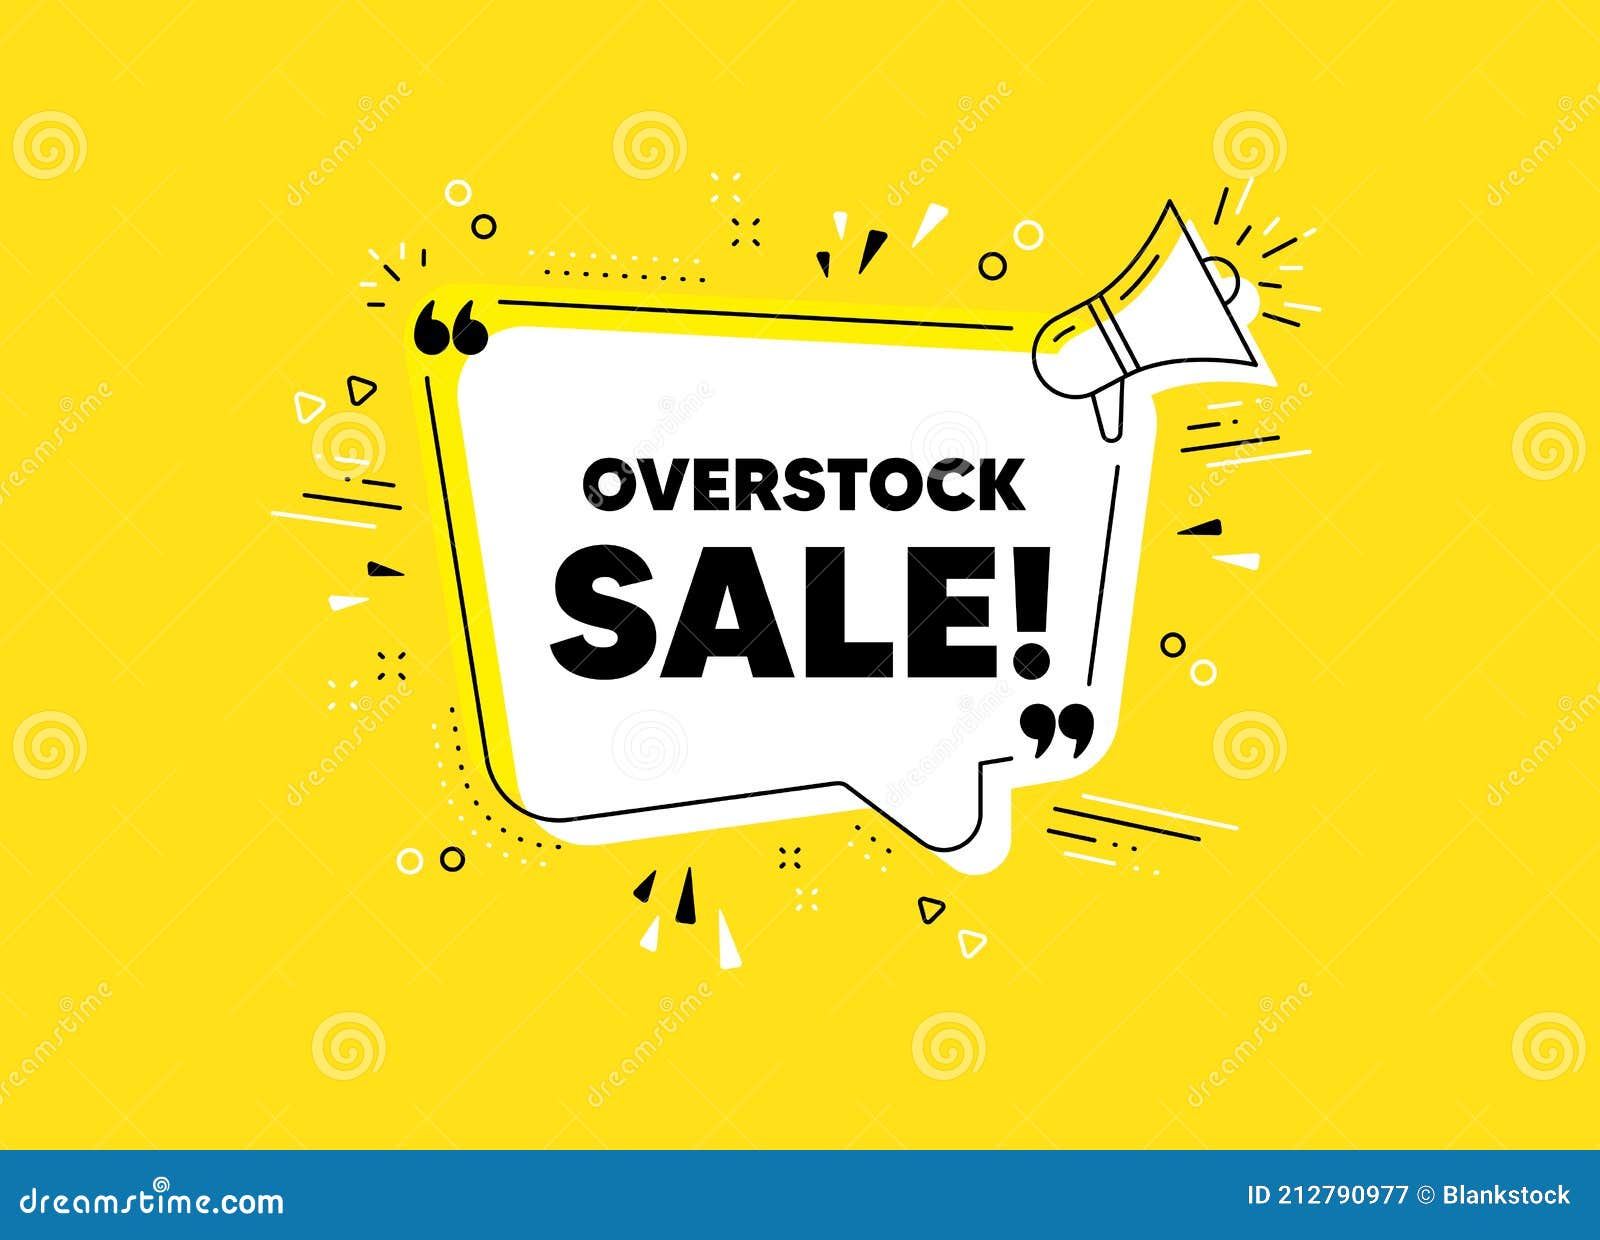 https://thumbs.dreamstime.com/z/overstock-sale-special-offer-price-sign-vector-overstock-sale-megaphone-yellow-vector-banner-special-offer-price-sign-advertising-212790977.jpg